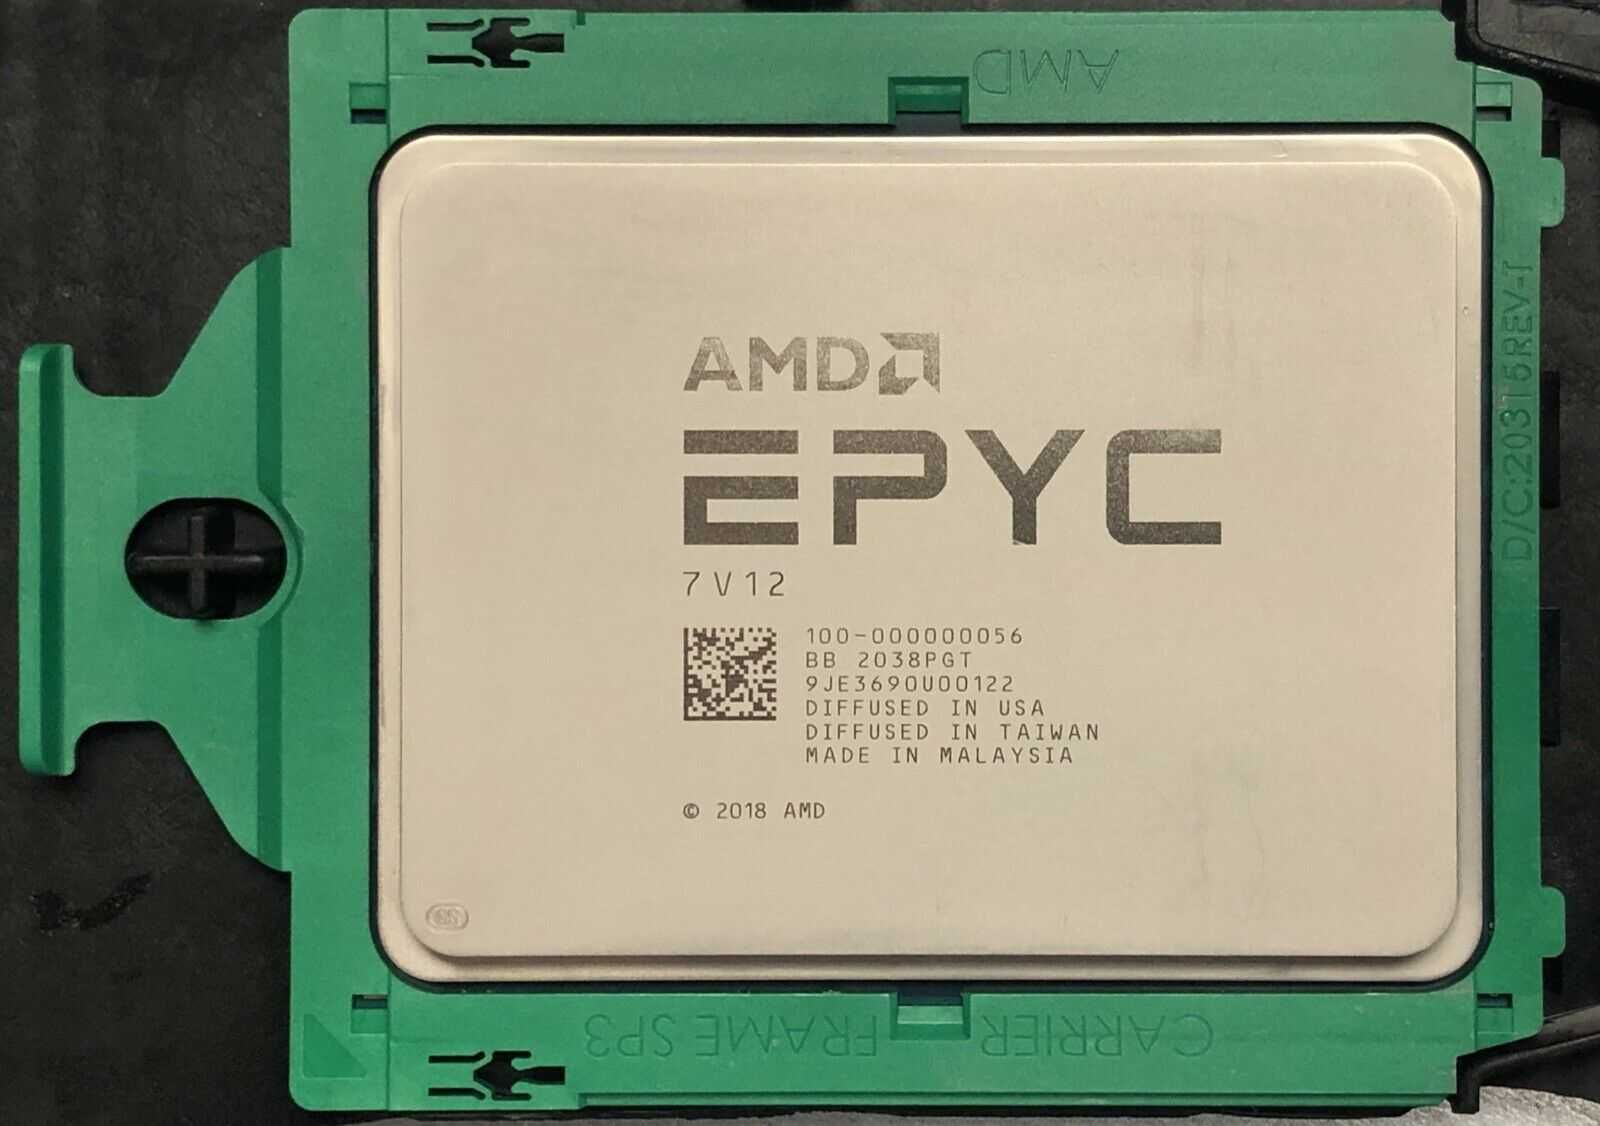 Procesor CPU AMD Epyc 7702  (3.35 GHz, 64 Cores/128 Threads, SP3) Tray